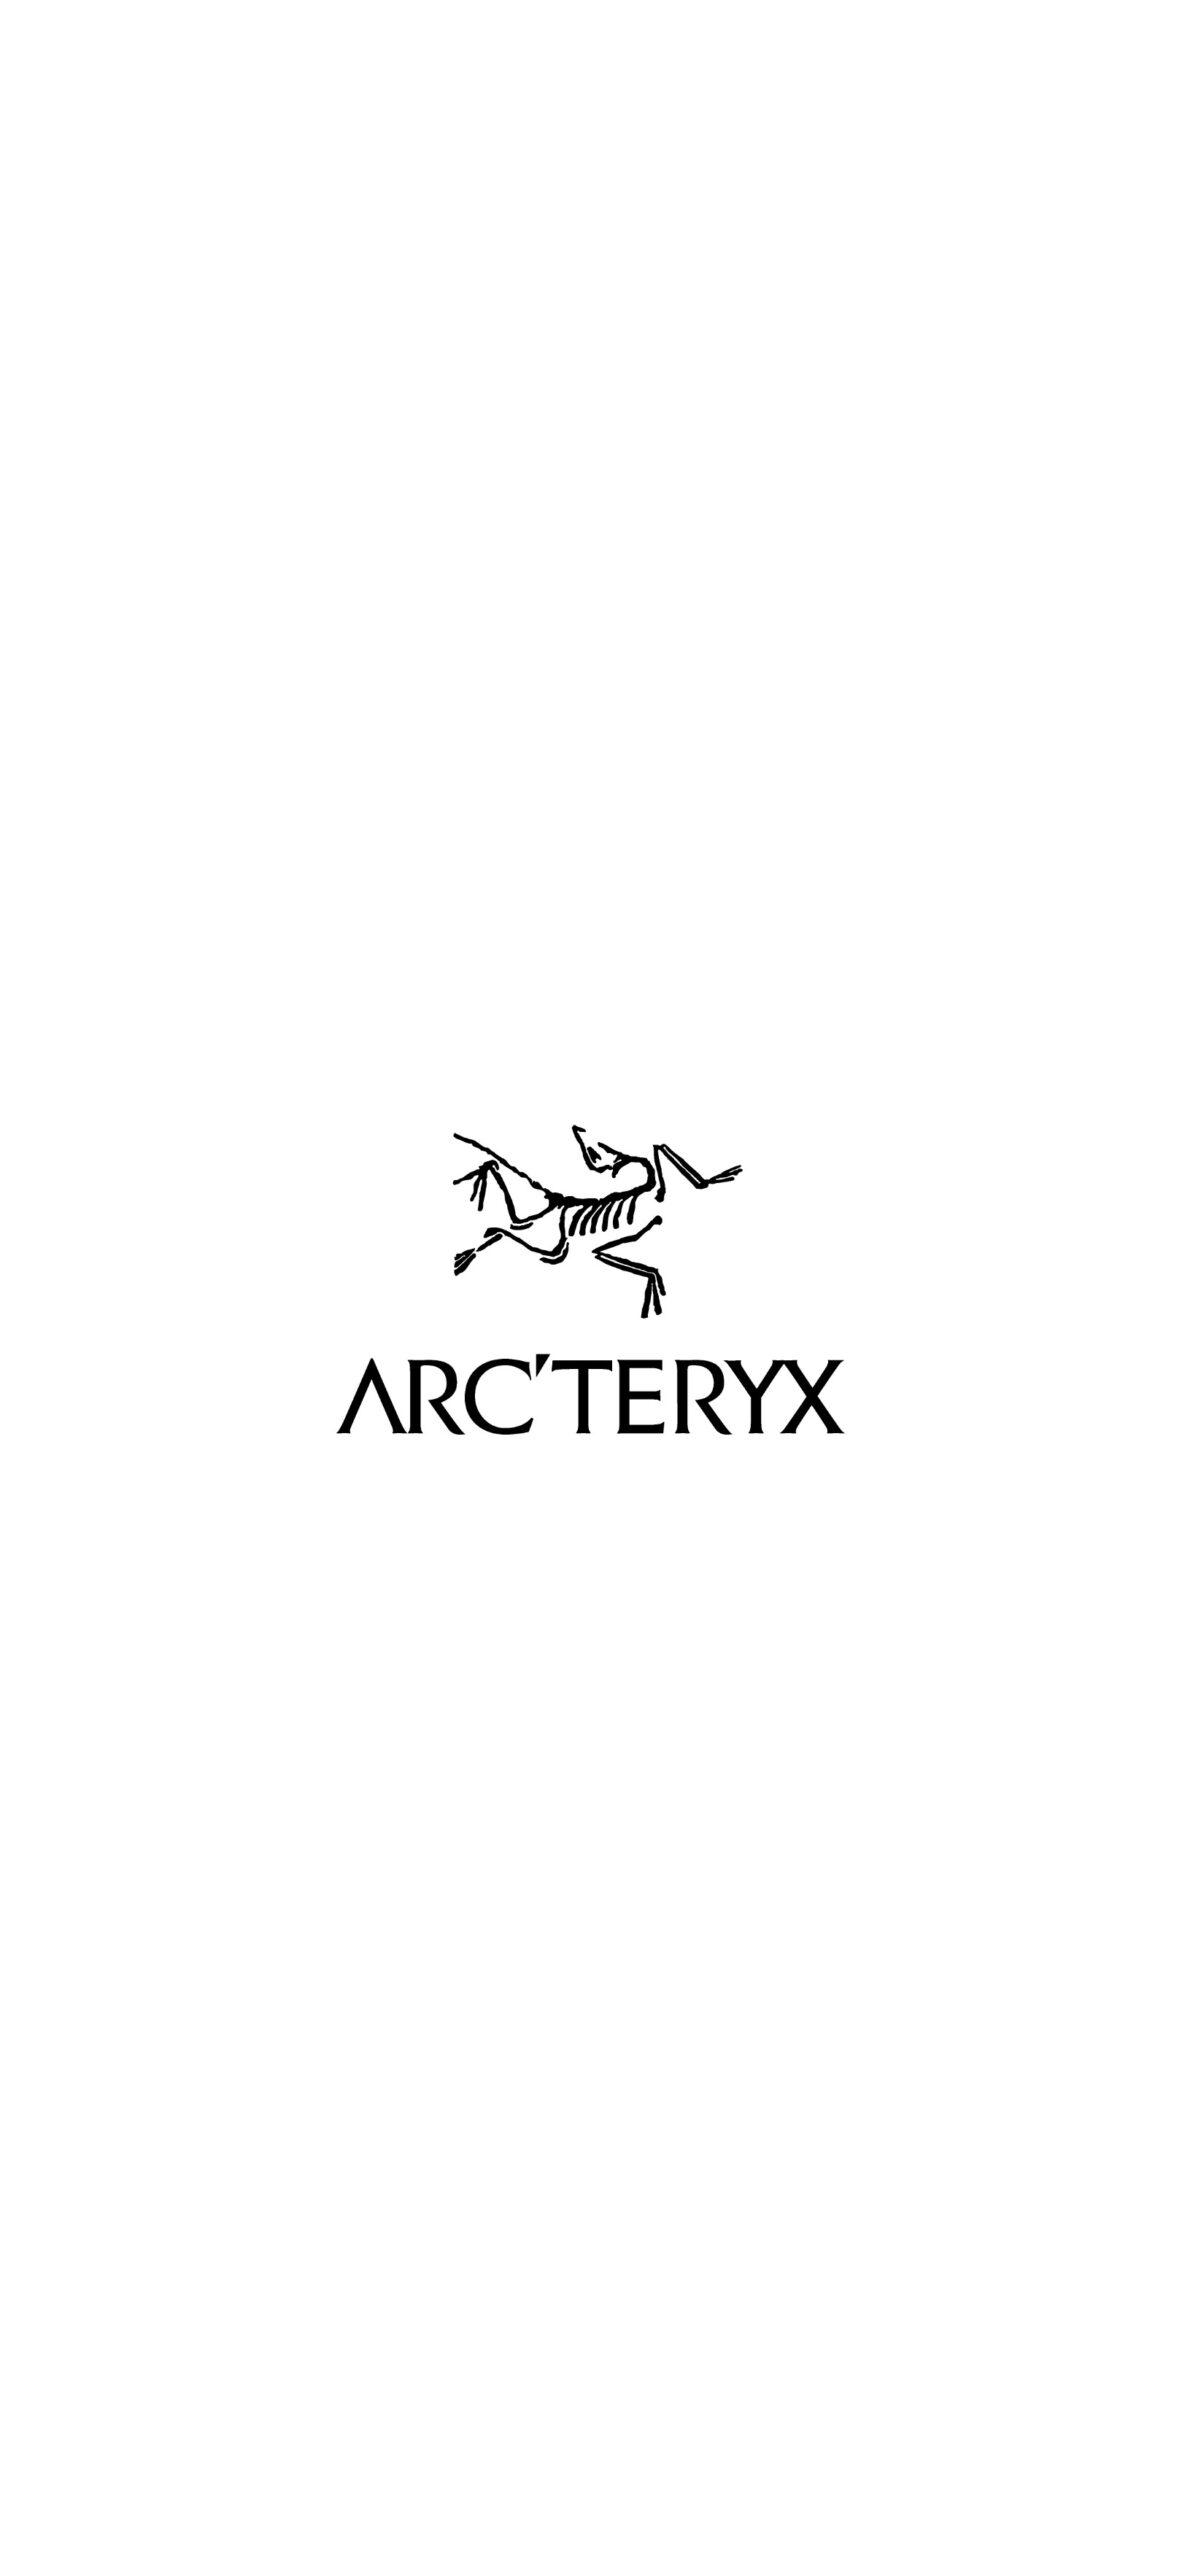 Arc Teryx アークテリクスの無料高画質スマホ壁紙50枚 エモい スマホ壁紙辞典